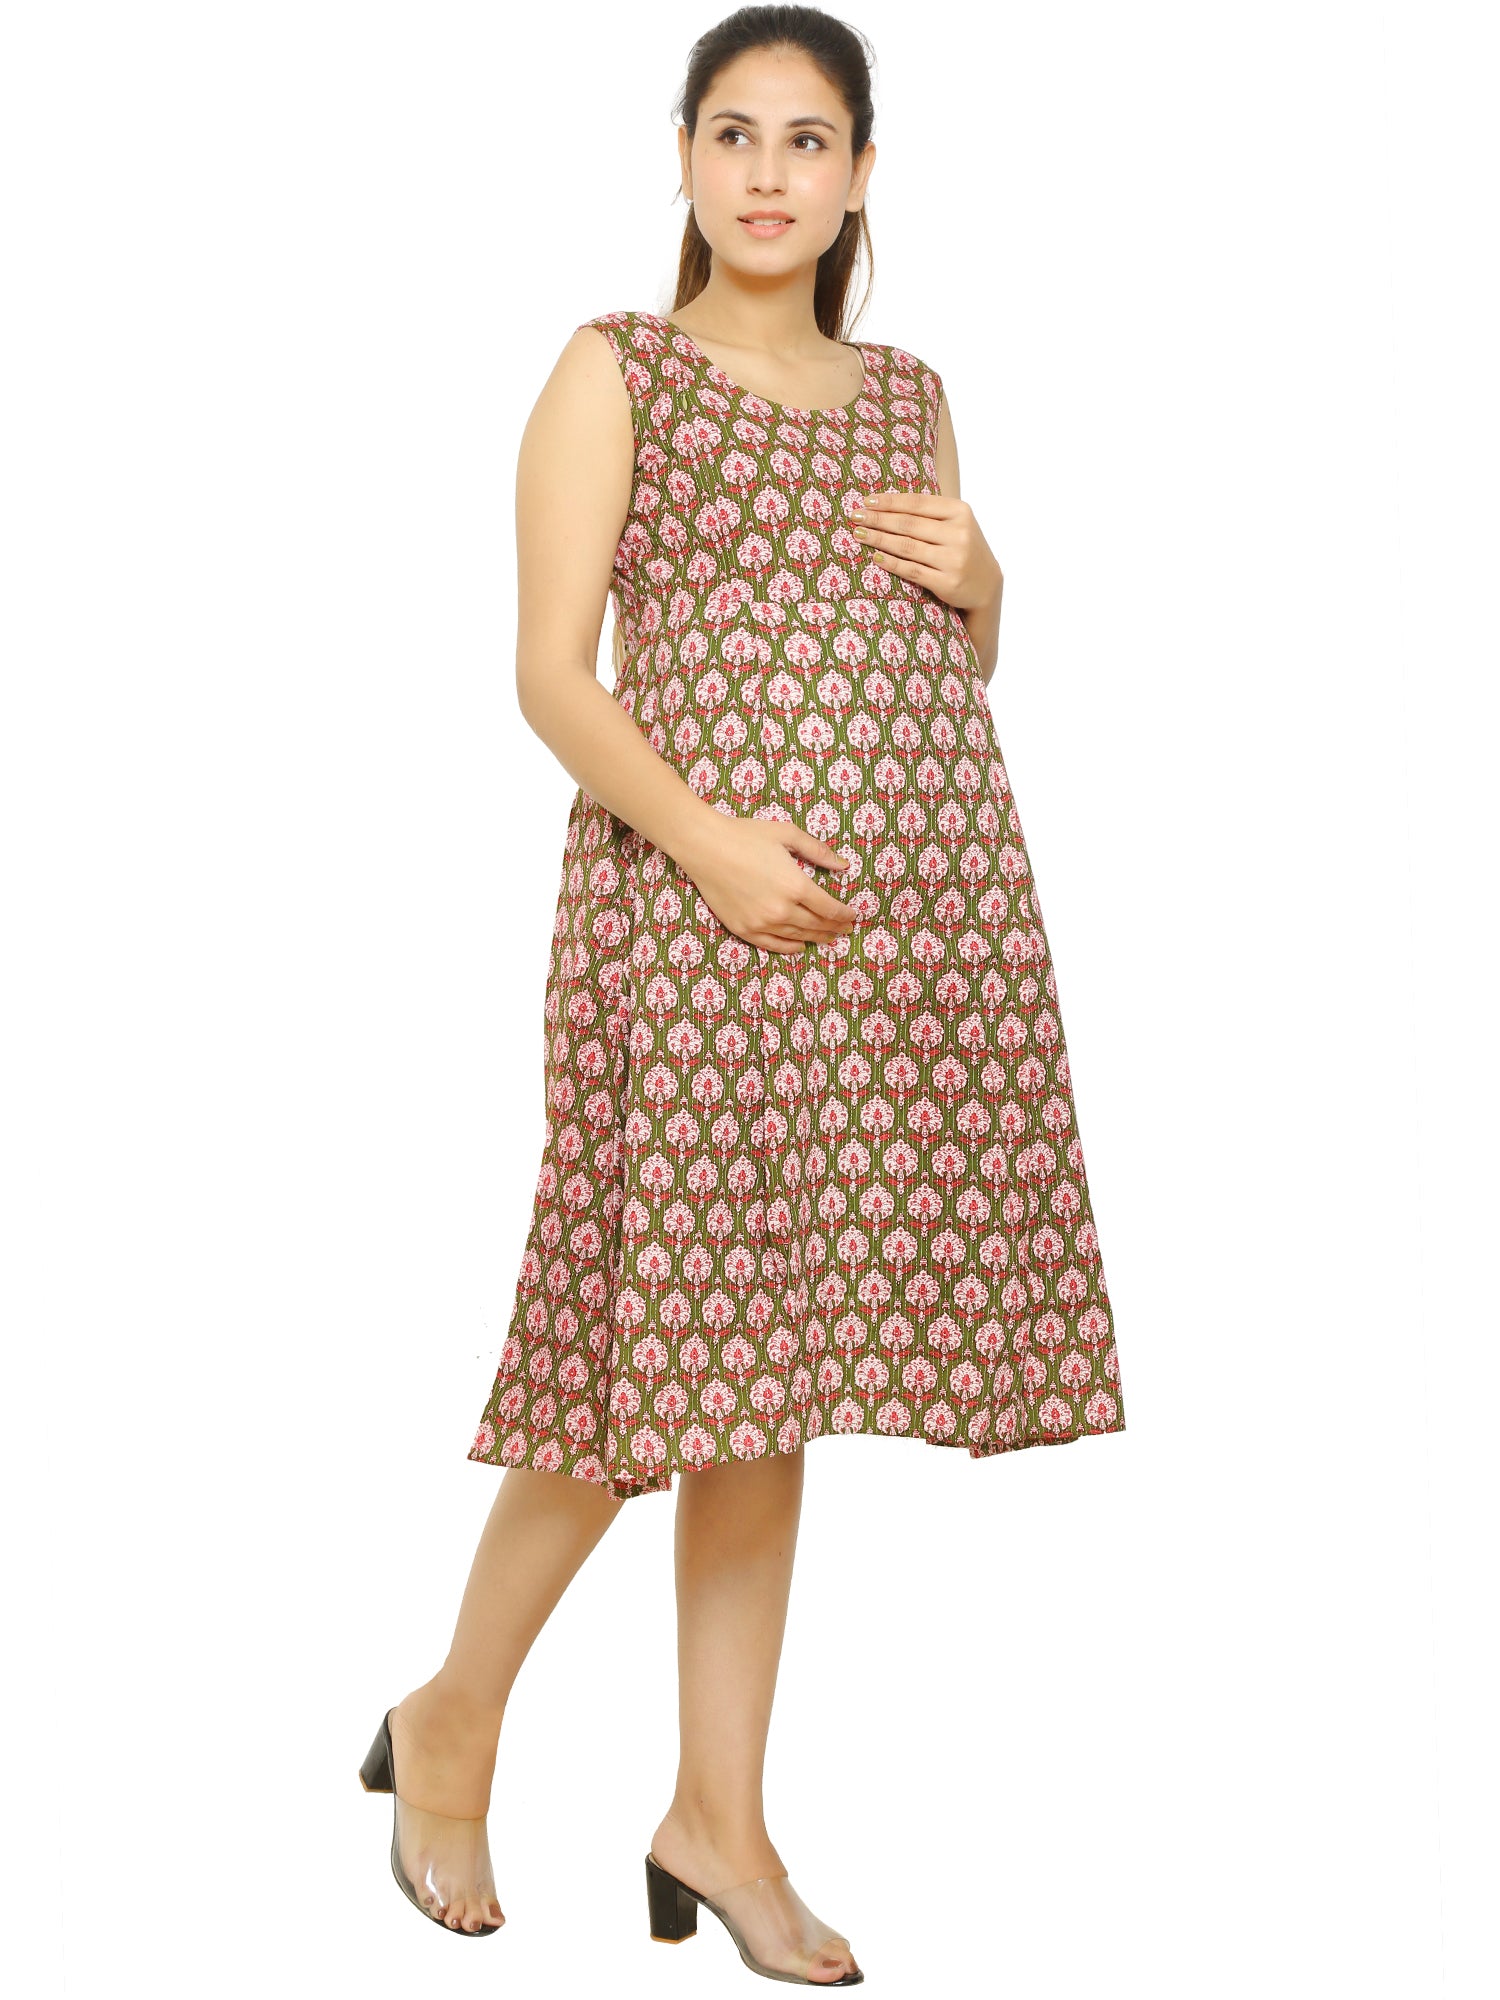 Women Plus Size Maternity Wear Peach feeding dresses for mothers-Apella